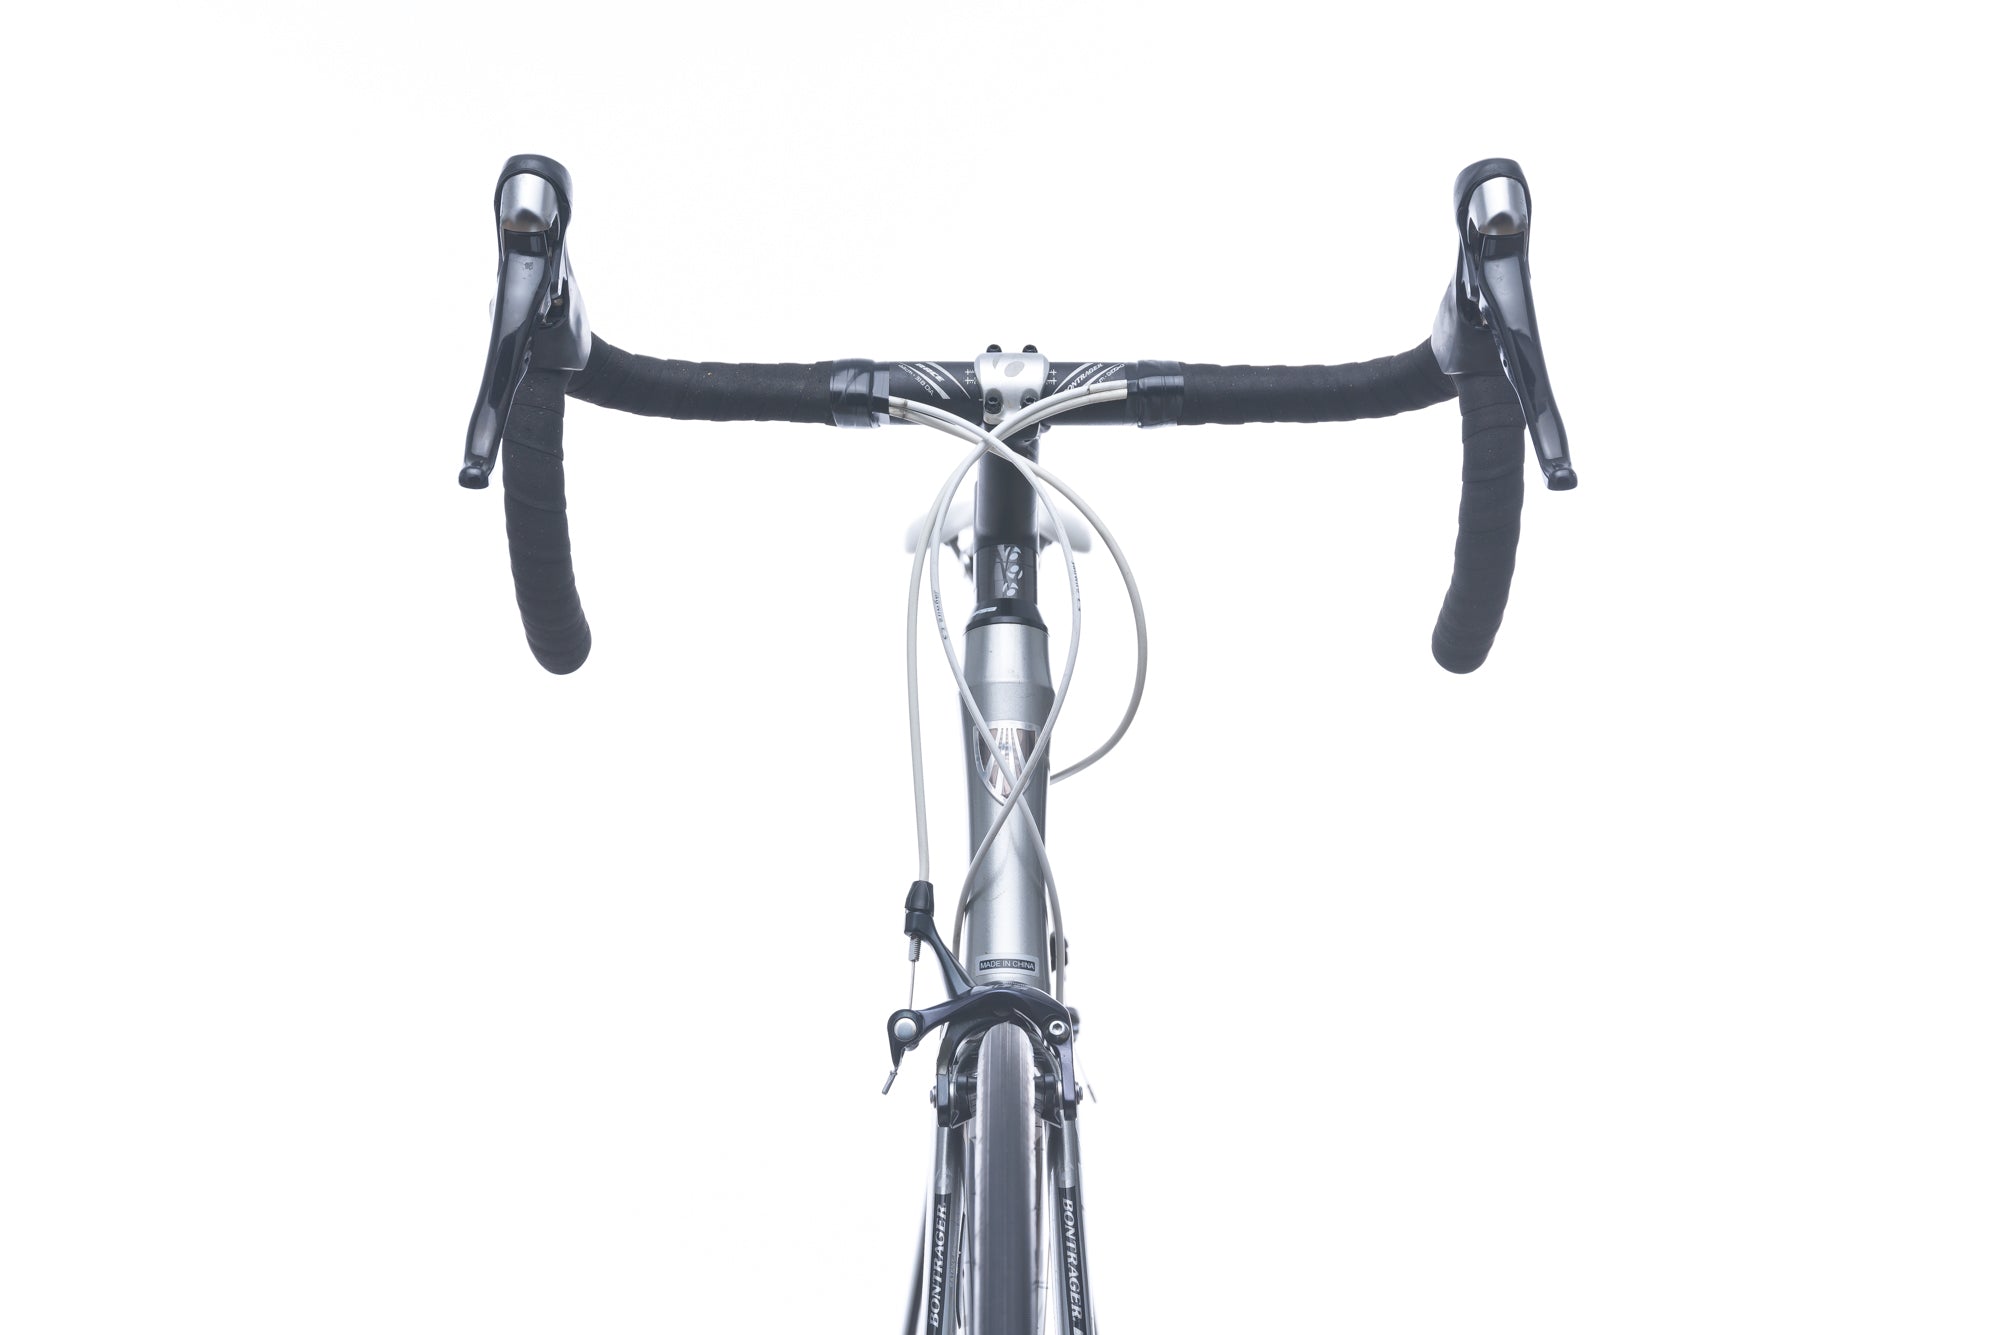 Trek Madone 2.3 58cm Bike - 2011 front wheel